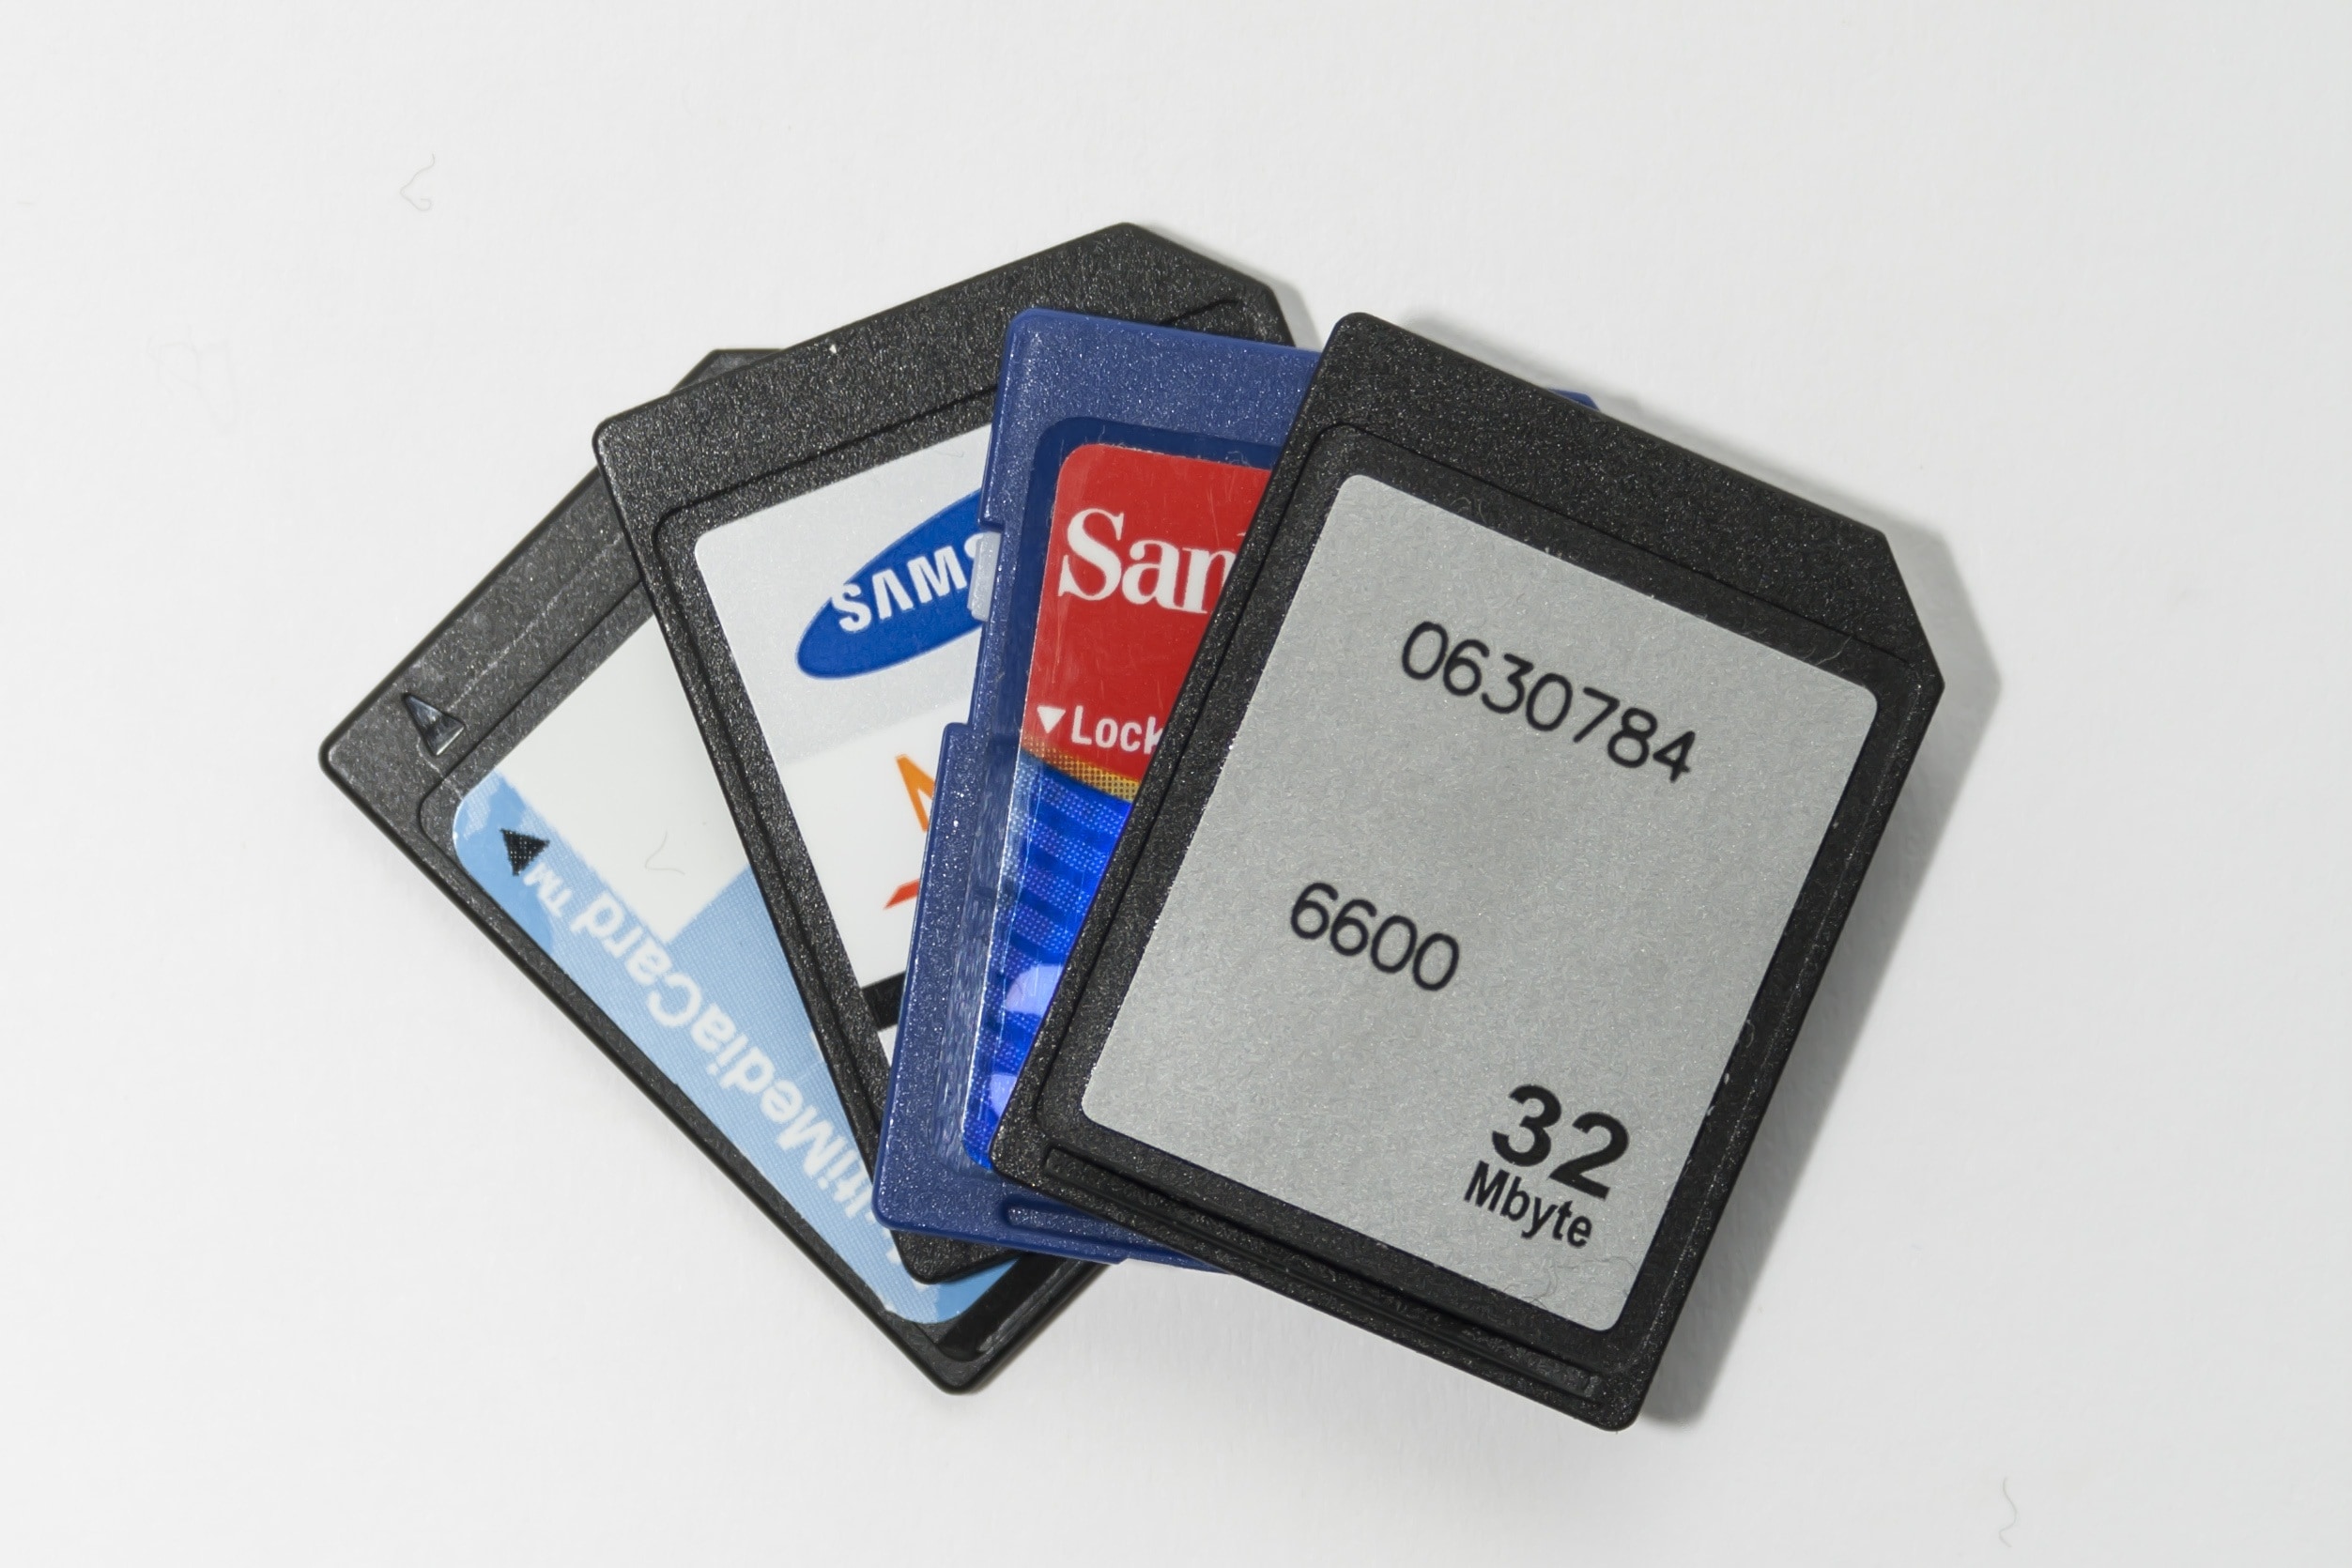 four memory card reader